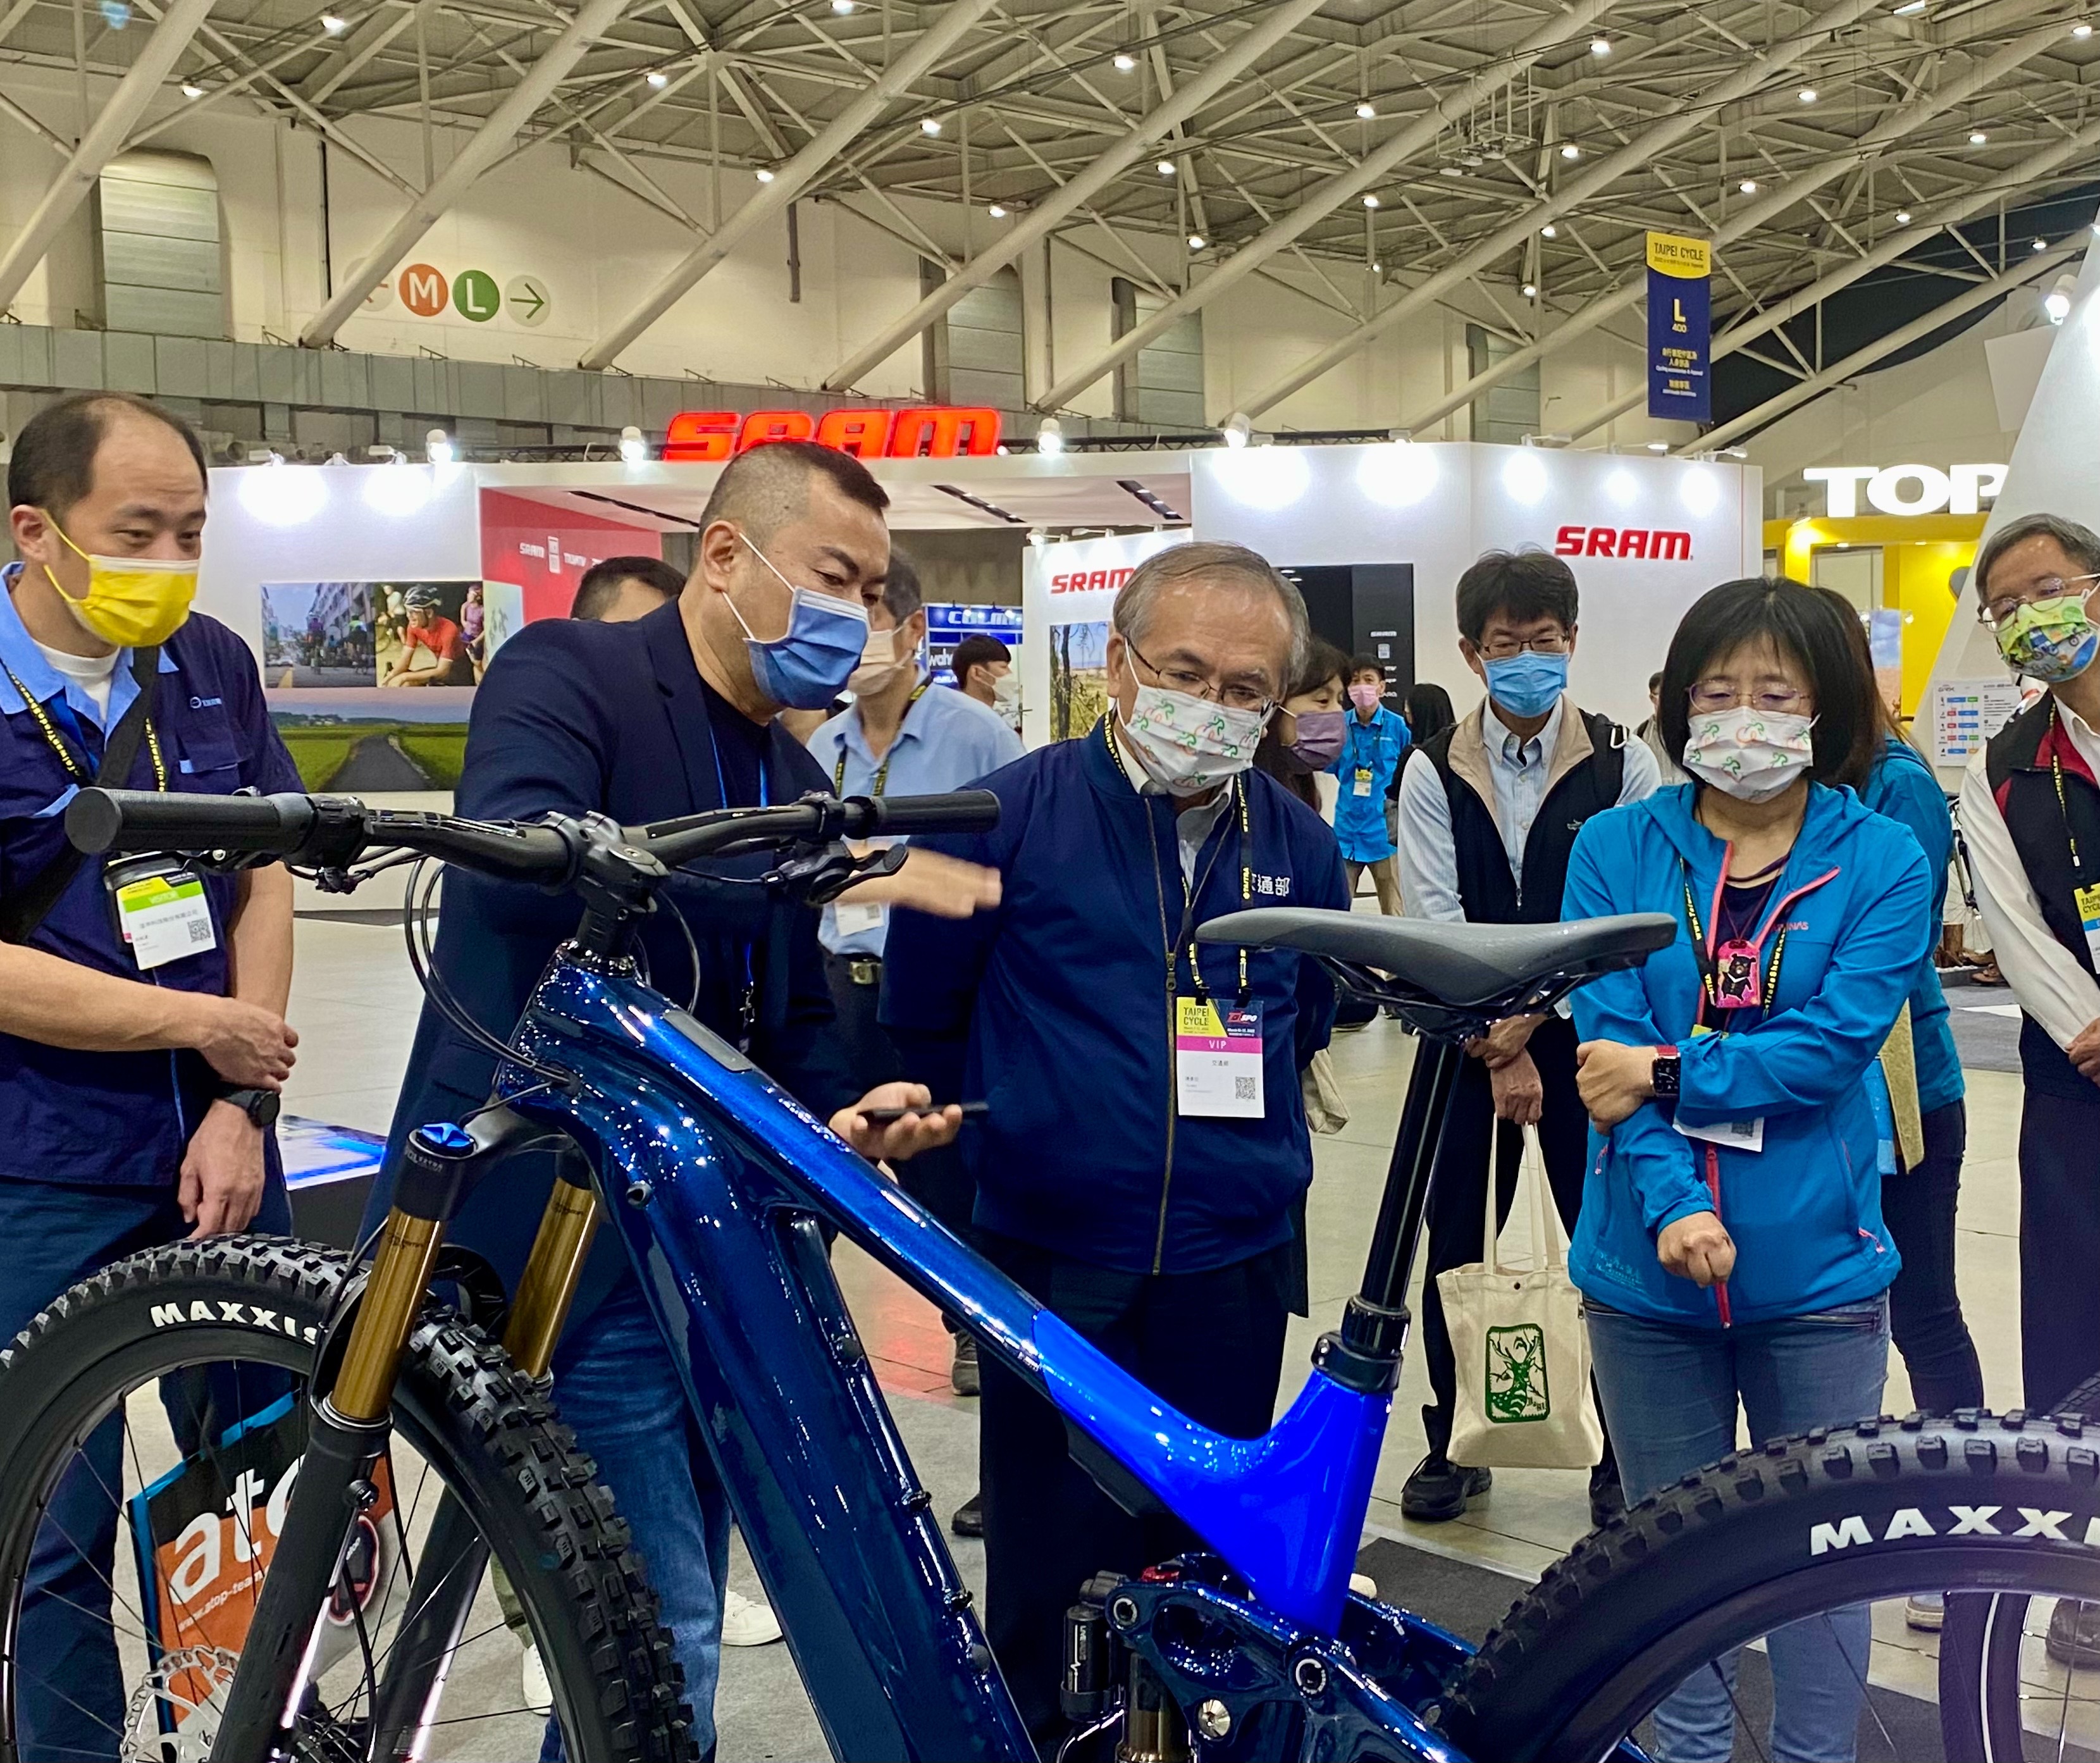 Taipei International Cycle Show